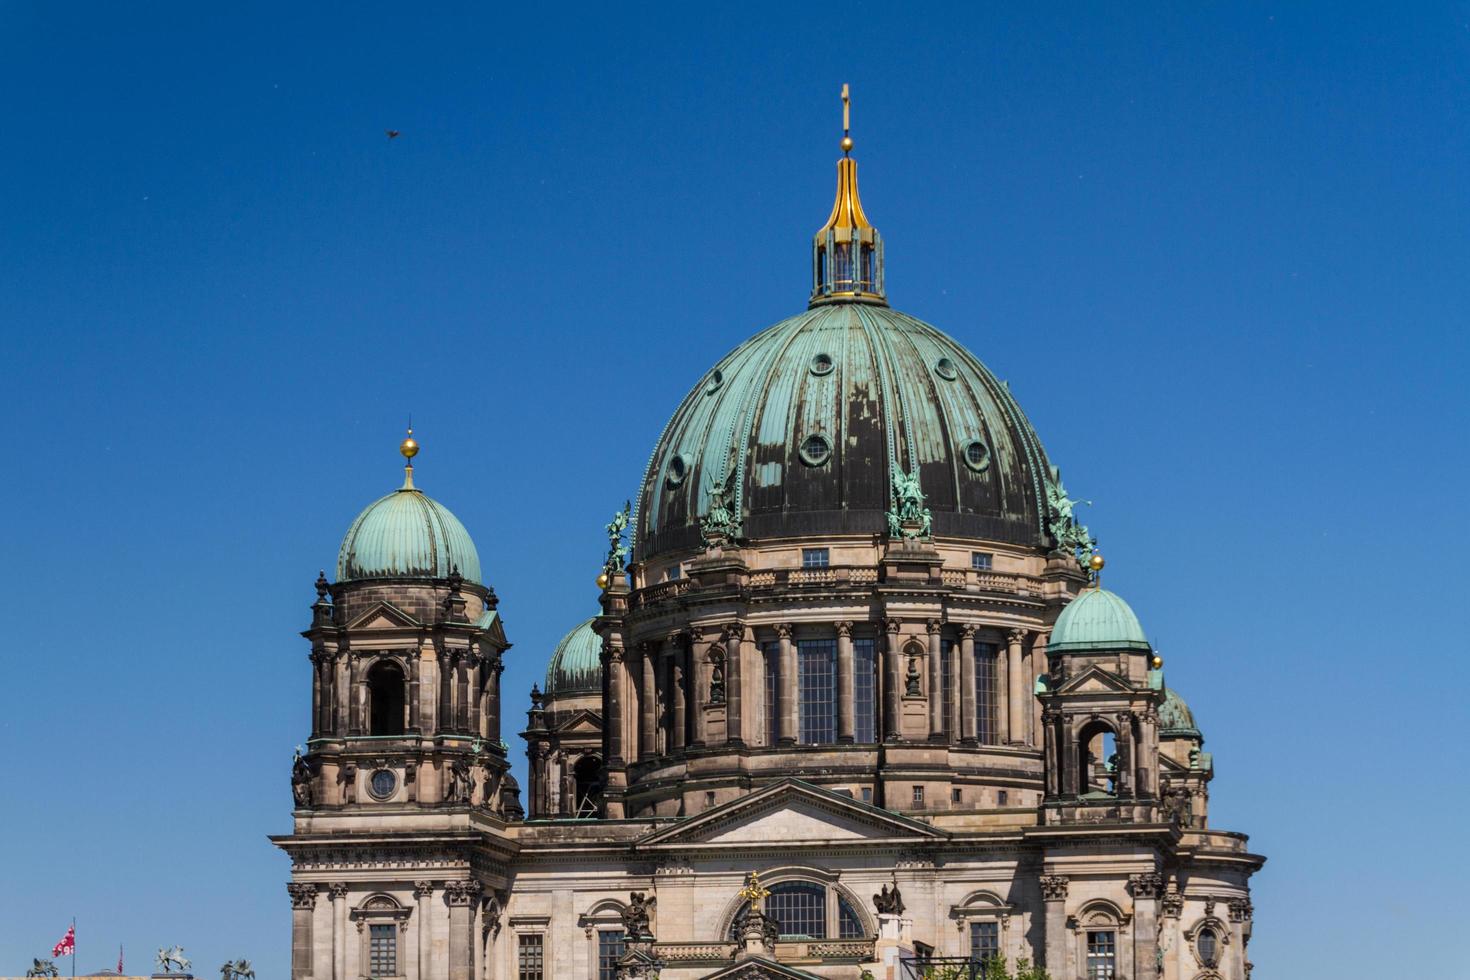 catedral de berlín berliner dom foto